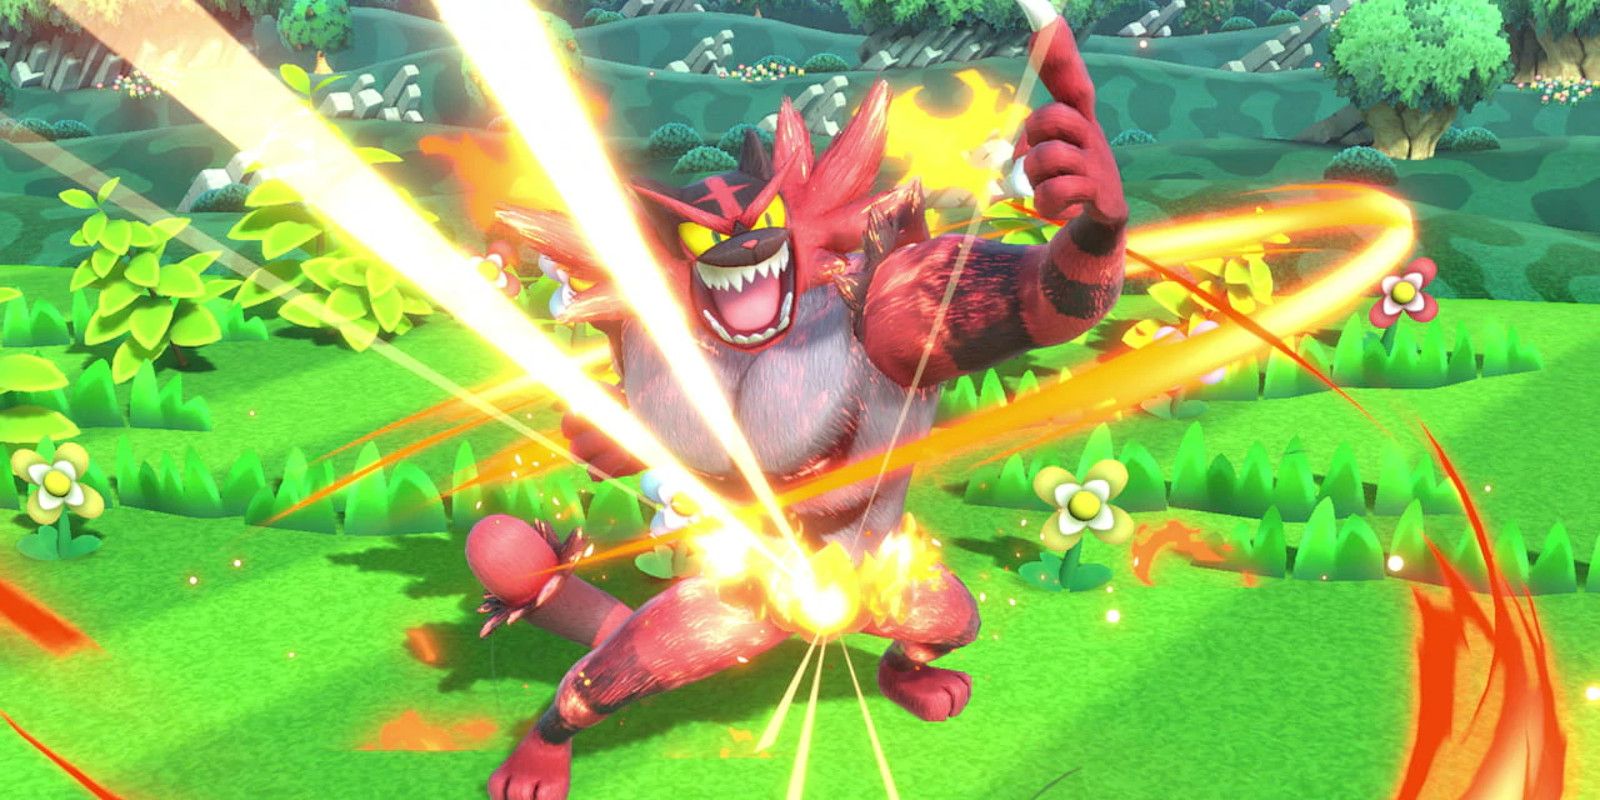 The Ultimate Incineroar  from Nintendo's Super Smash Bros